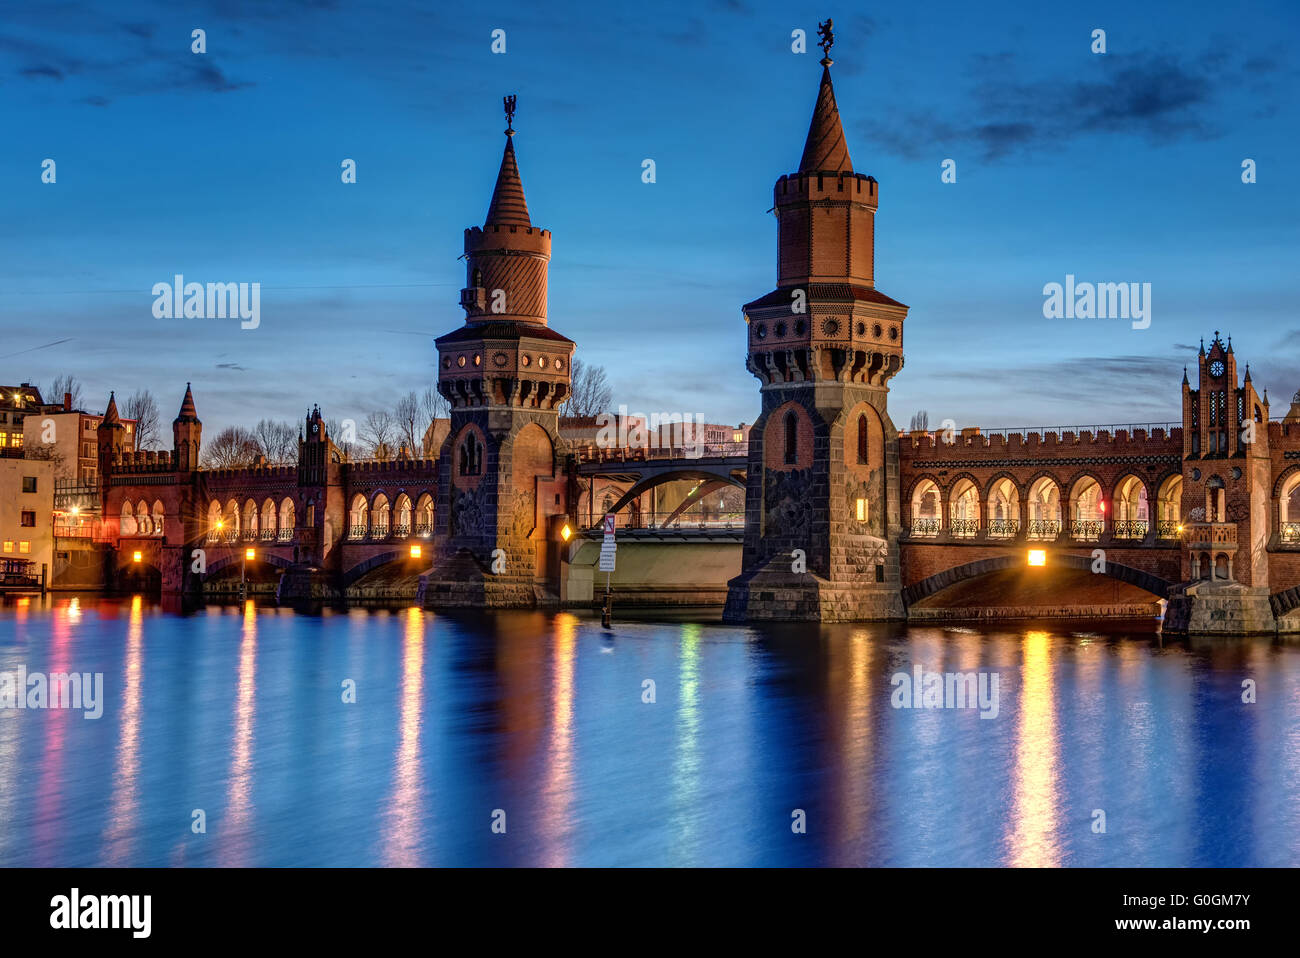 The beautiful Oberbaum Bridge in Berlin at night Stock Photo